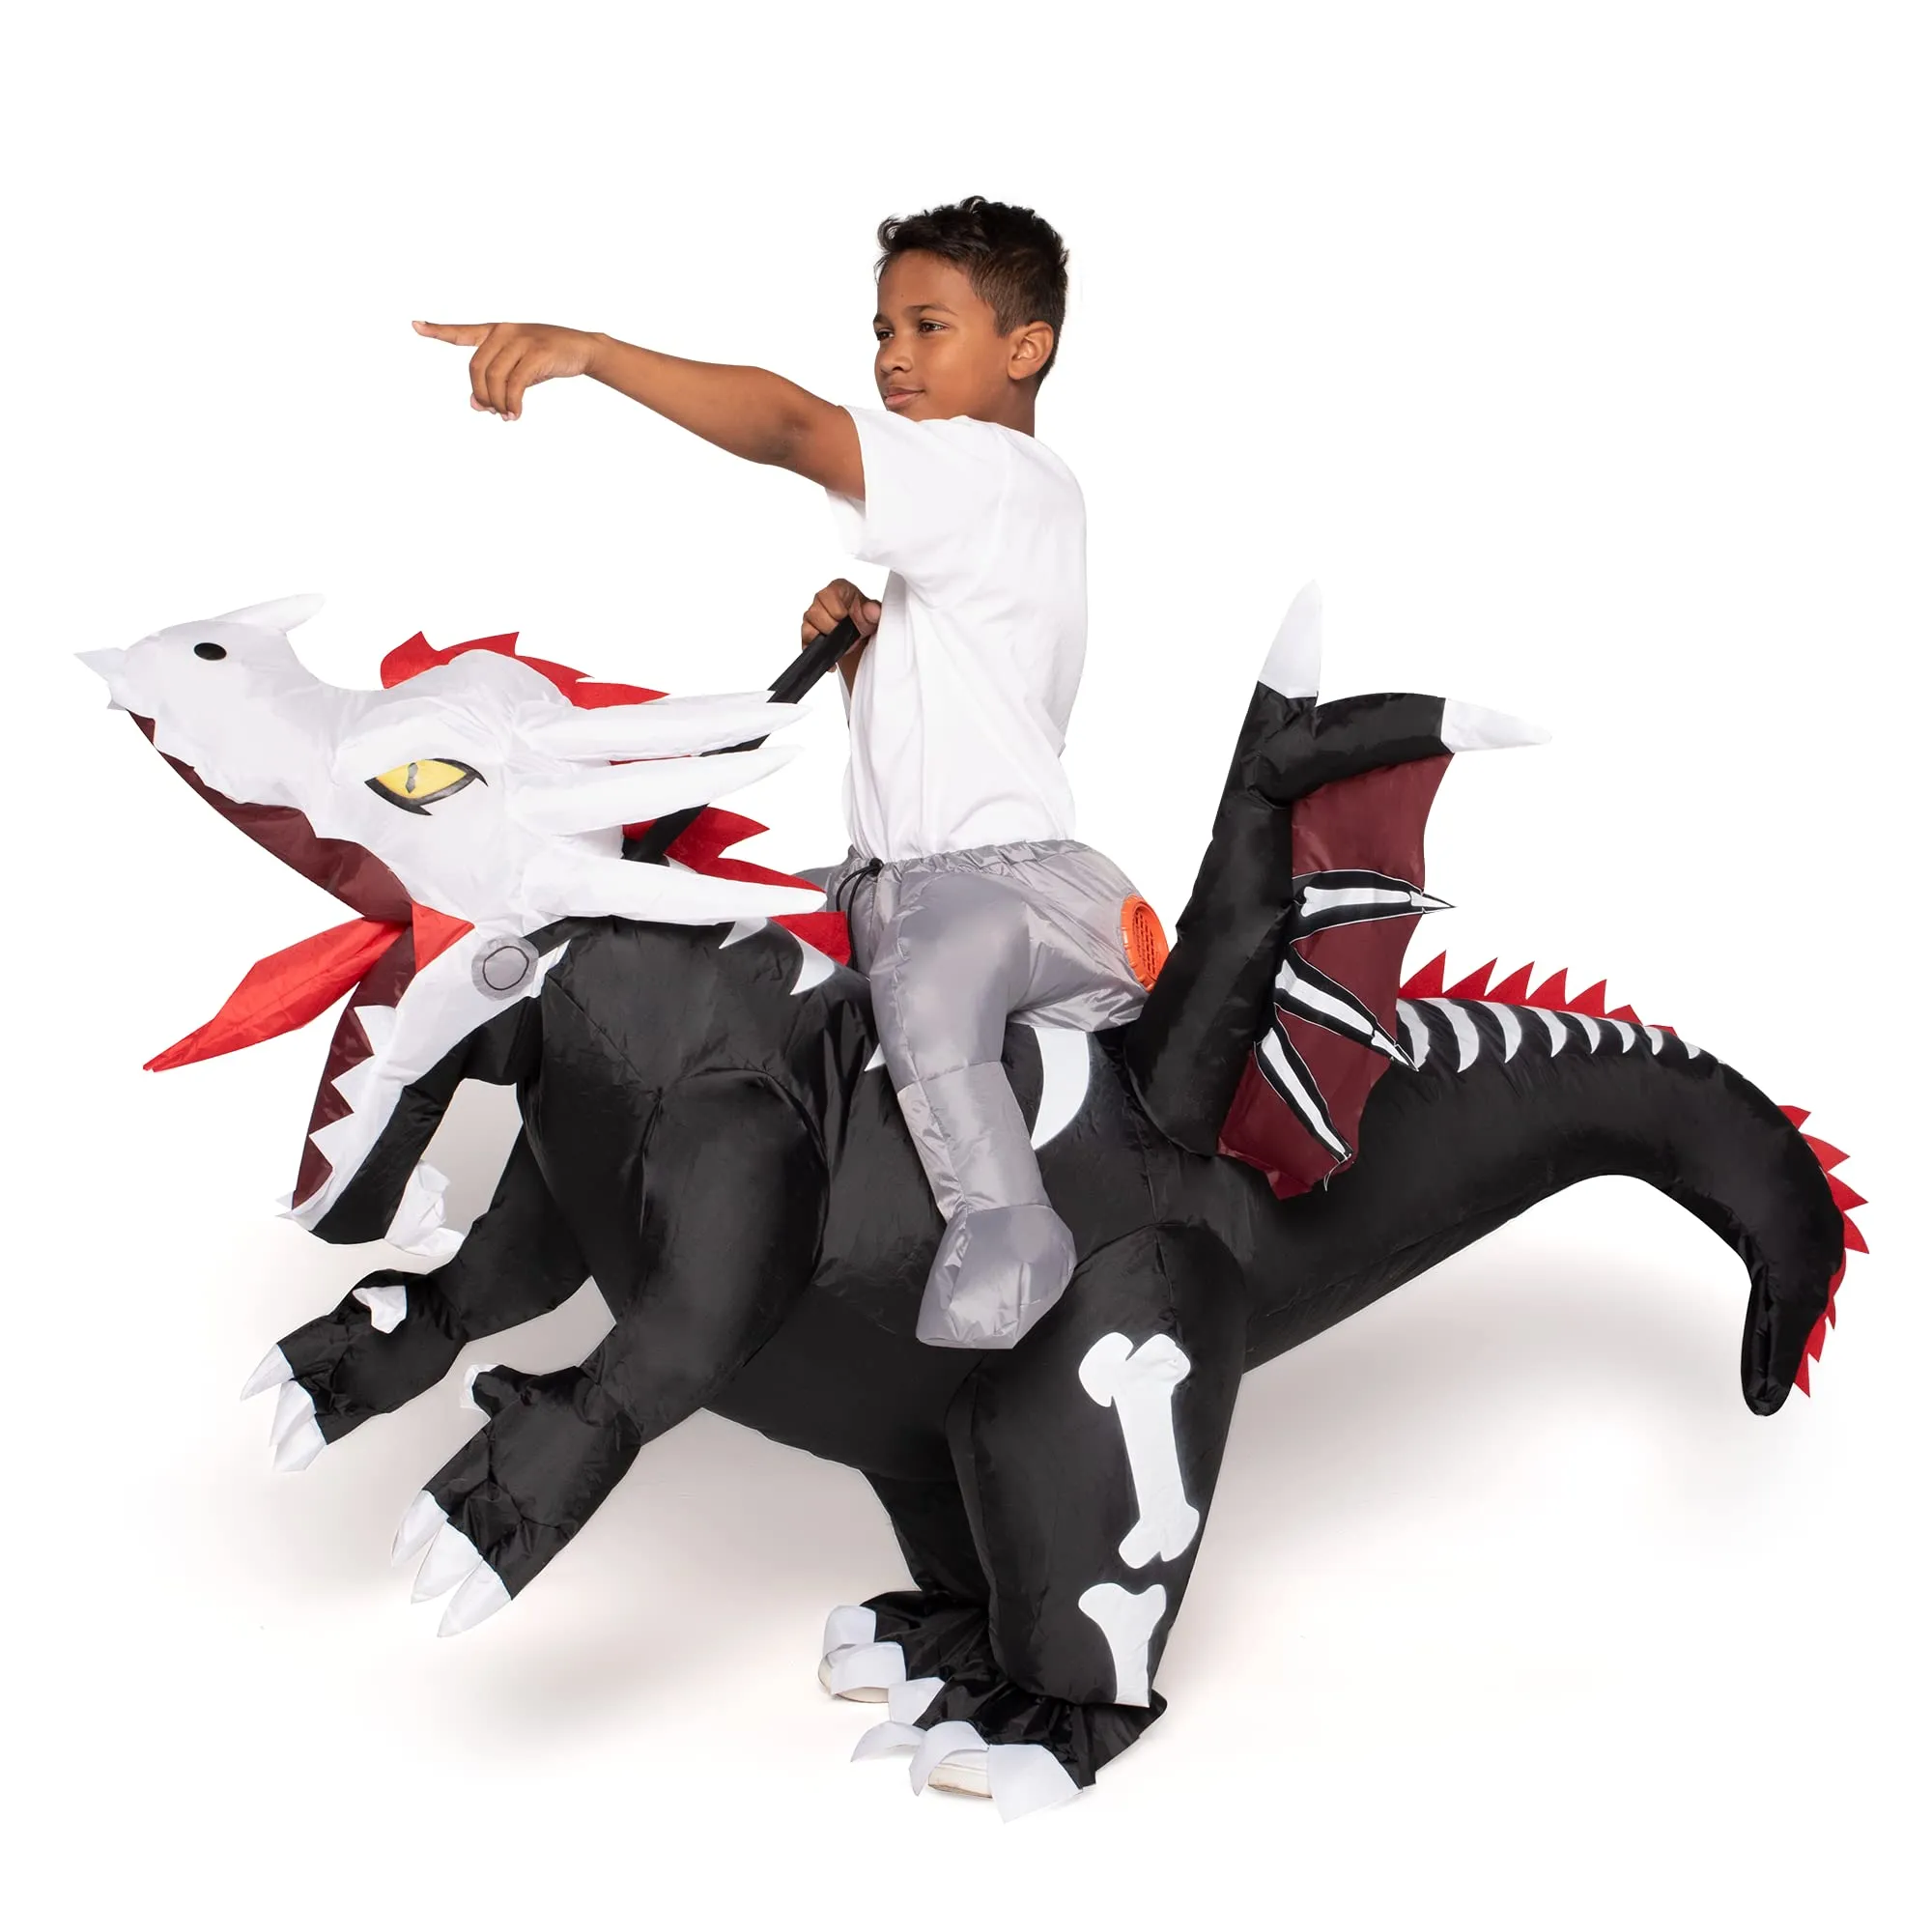 Skeleton dragon inflatable animal costumes for kids